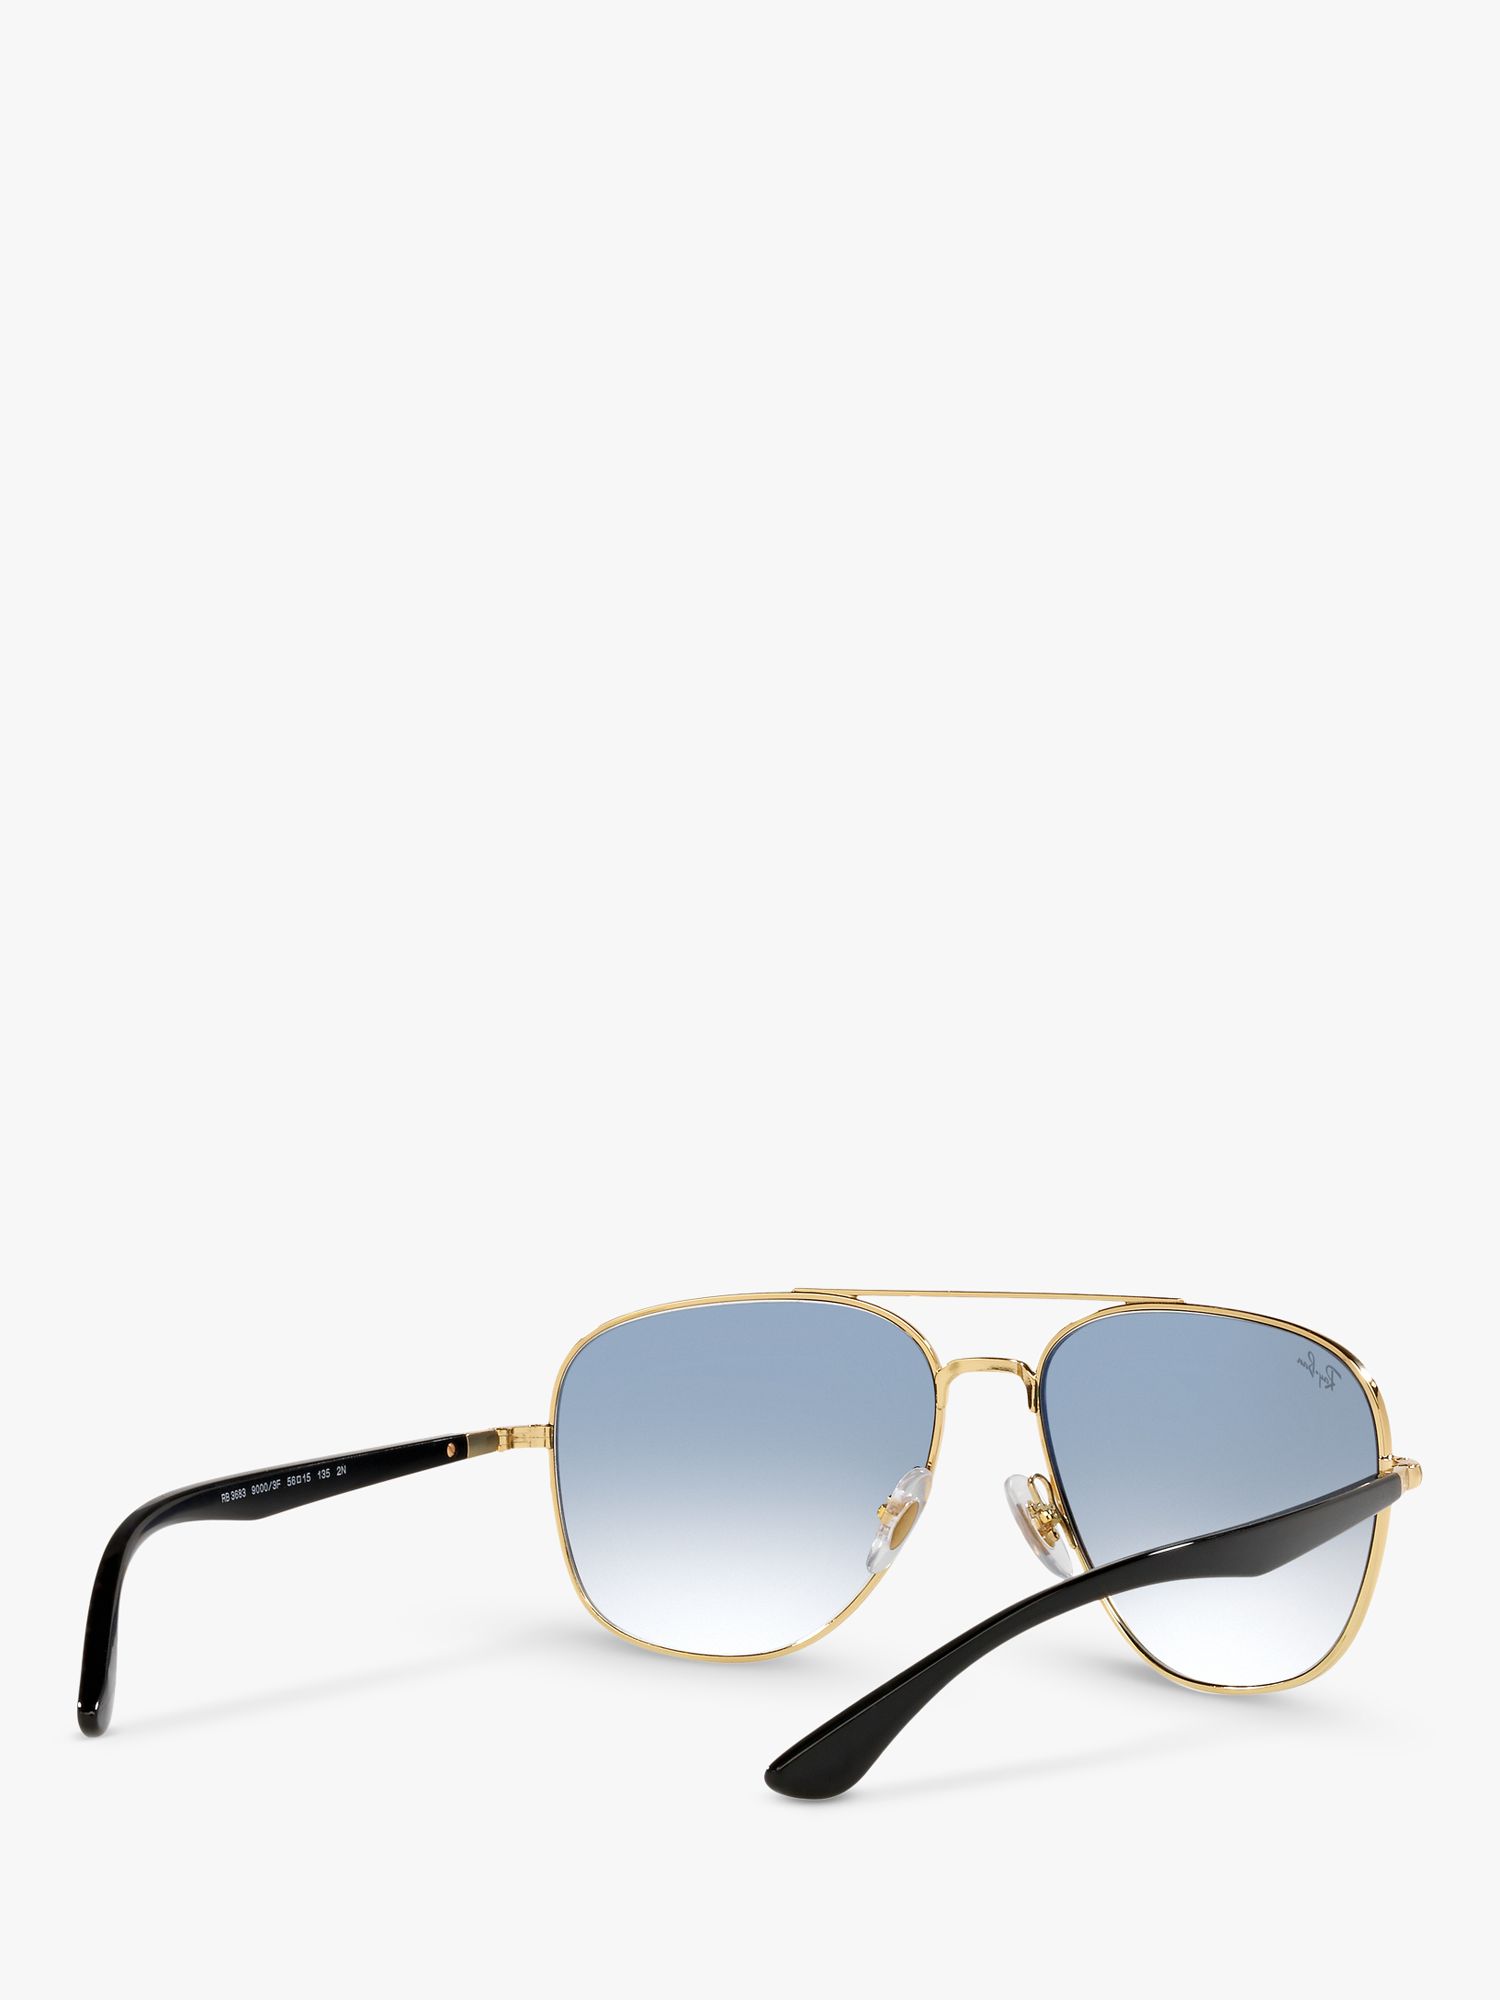 Ray-Ban RB3683 Unisex Square Sunglasses, Shiny Black/Blue Gradient at ...